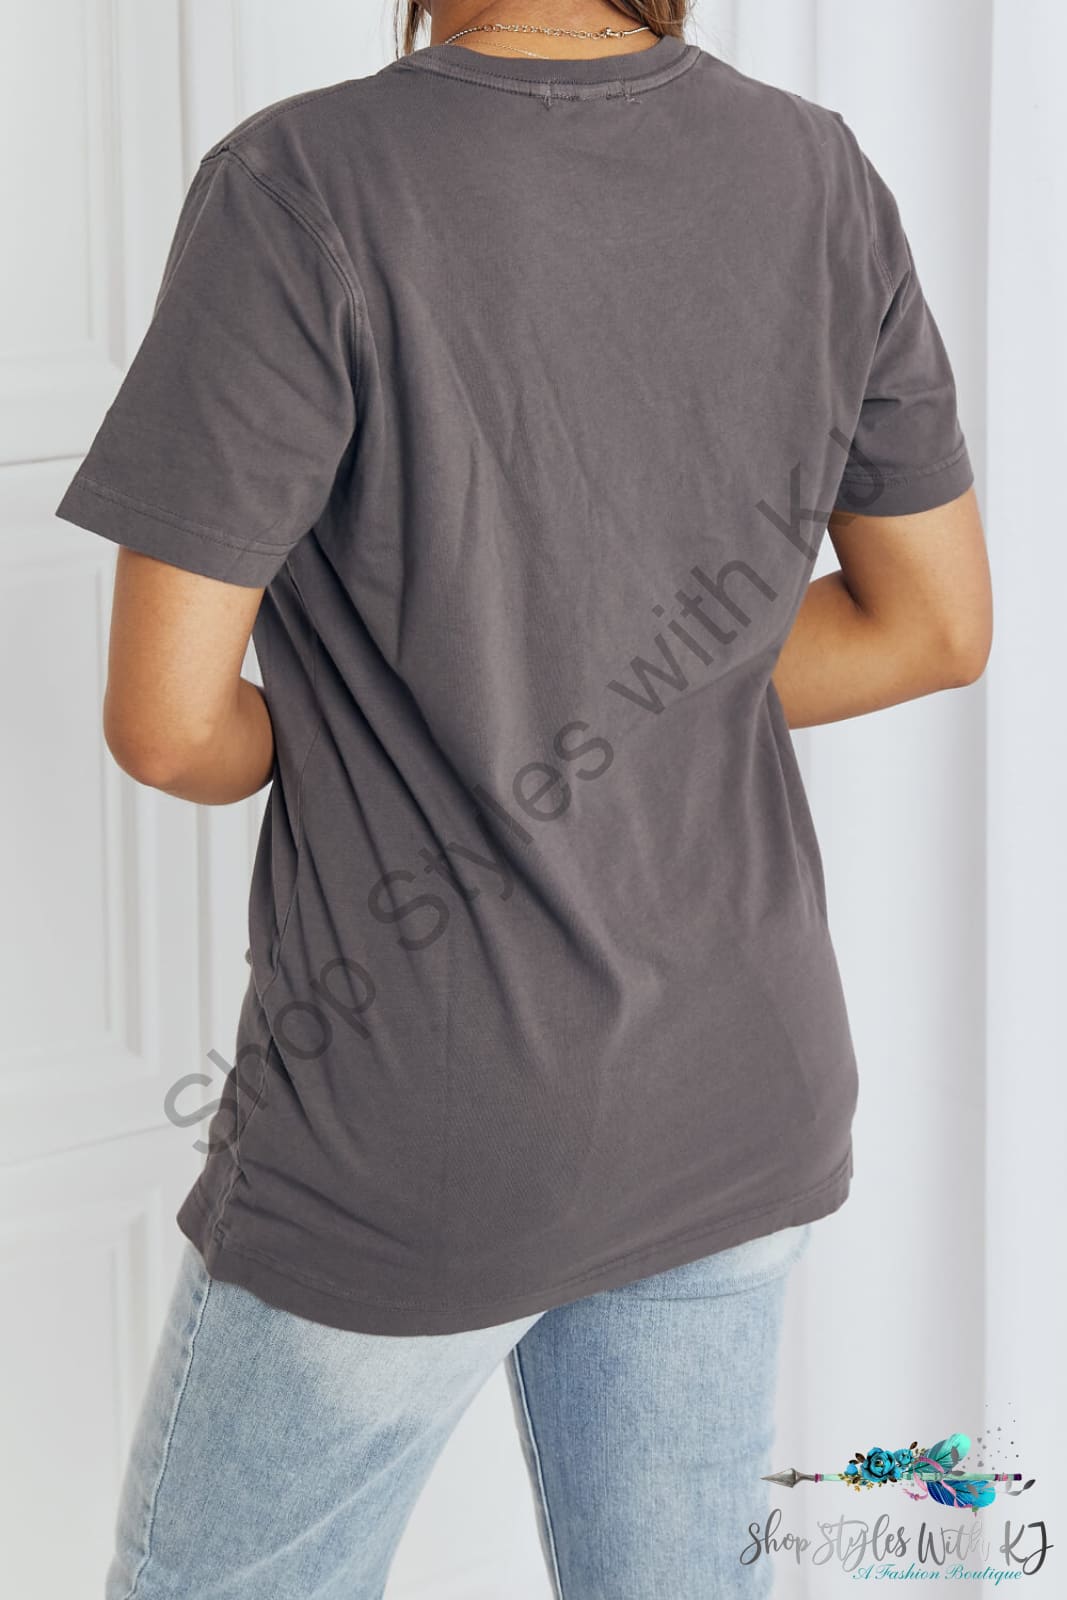 Eagle Graphic Tee Shirt Shirts & Tops